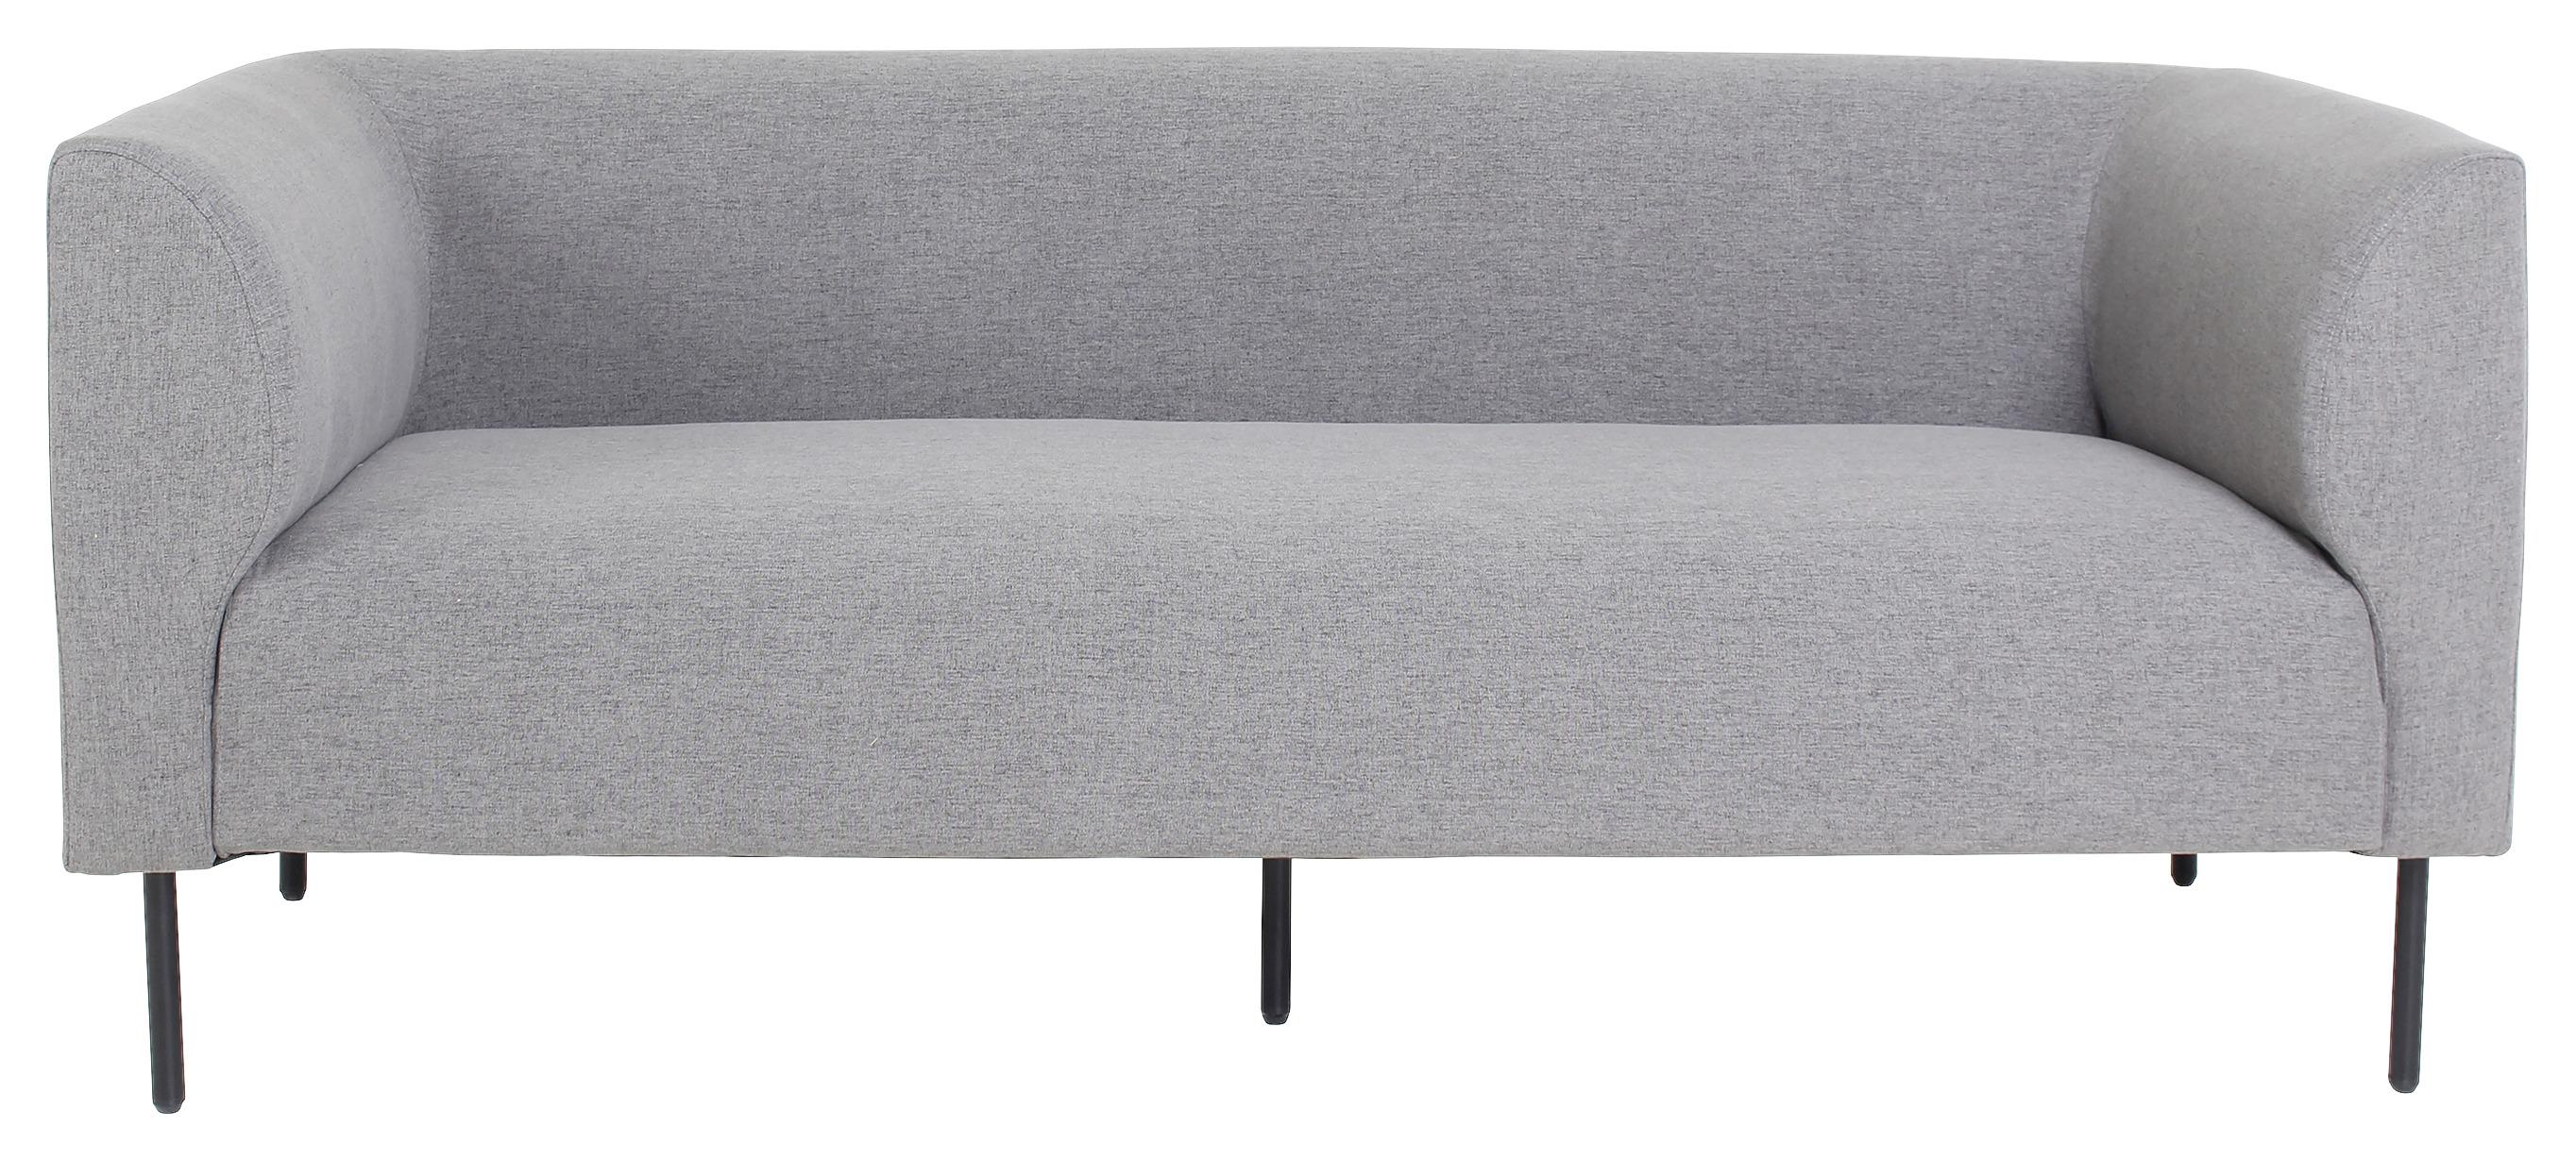 3-Sitzer-Sofa Kadri Grau/Schwarz - Schwarz/Grau, MODERN, Textil/Metall (185/74/57cm) - MID.YOU